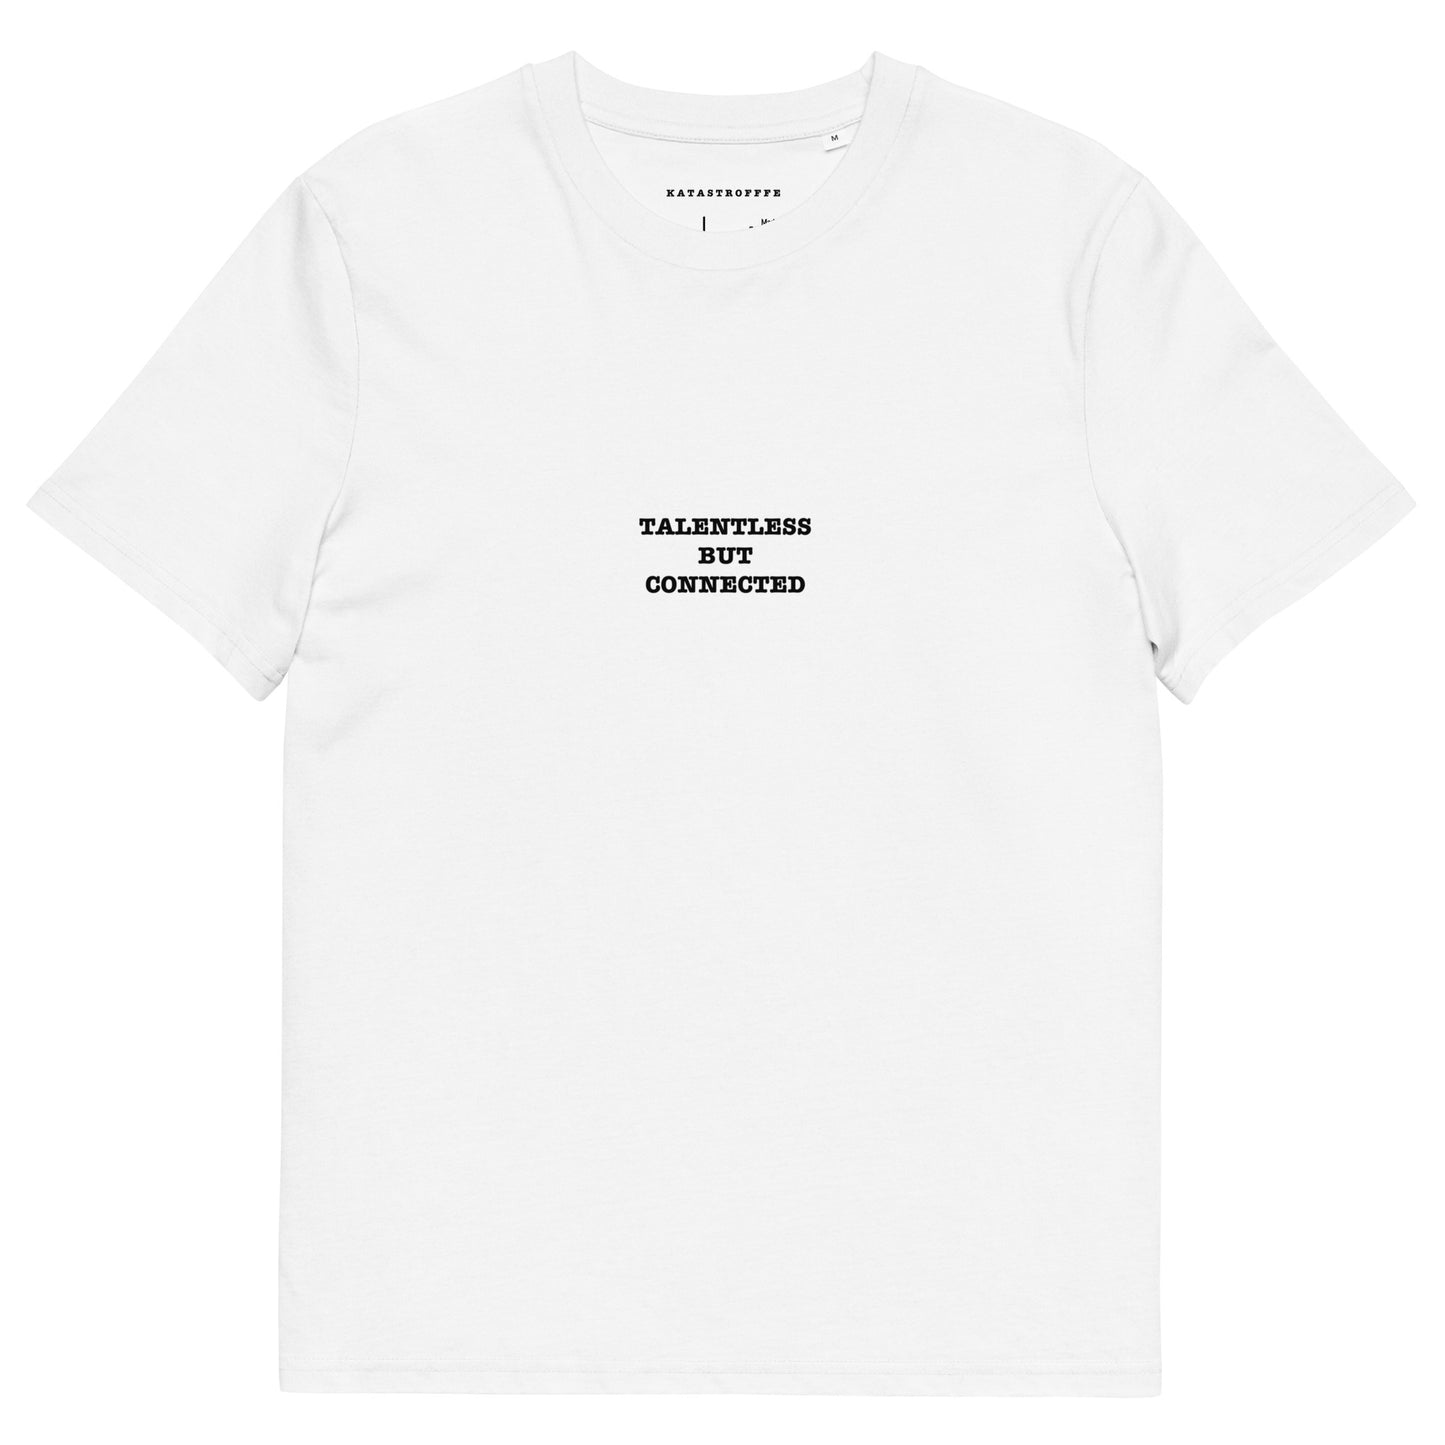 TALENTLESS BUT CONNECTED Unisex organic cotton t-shirt